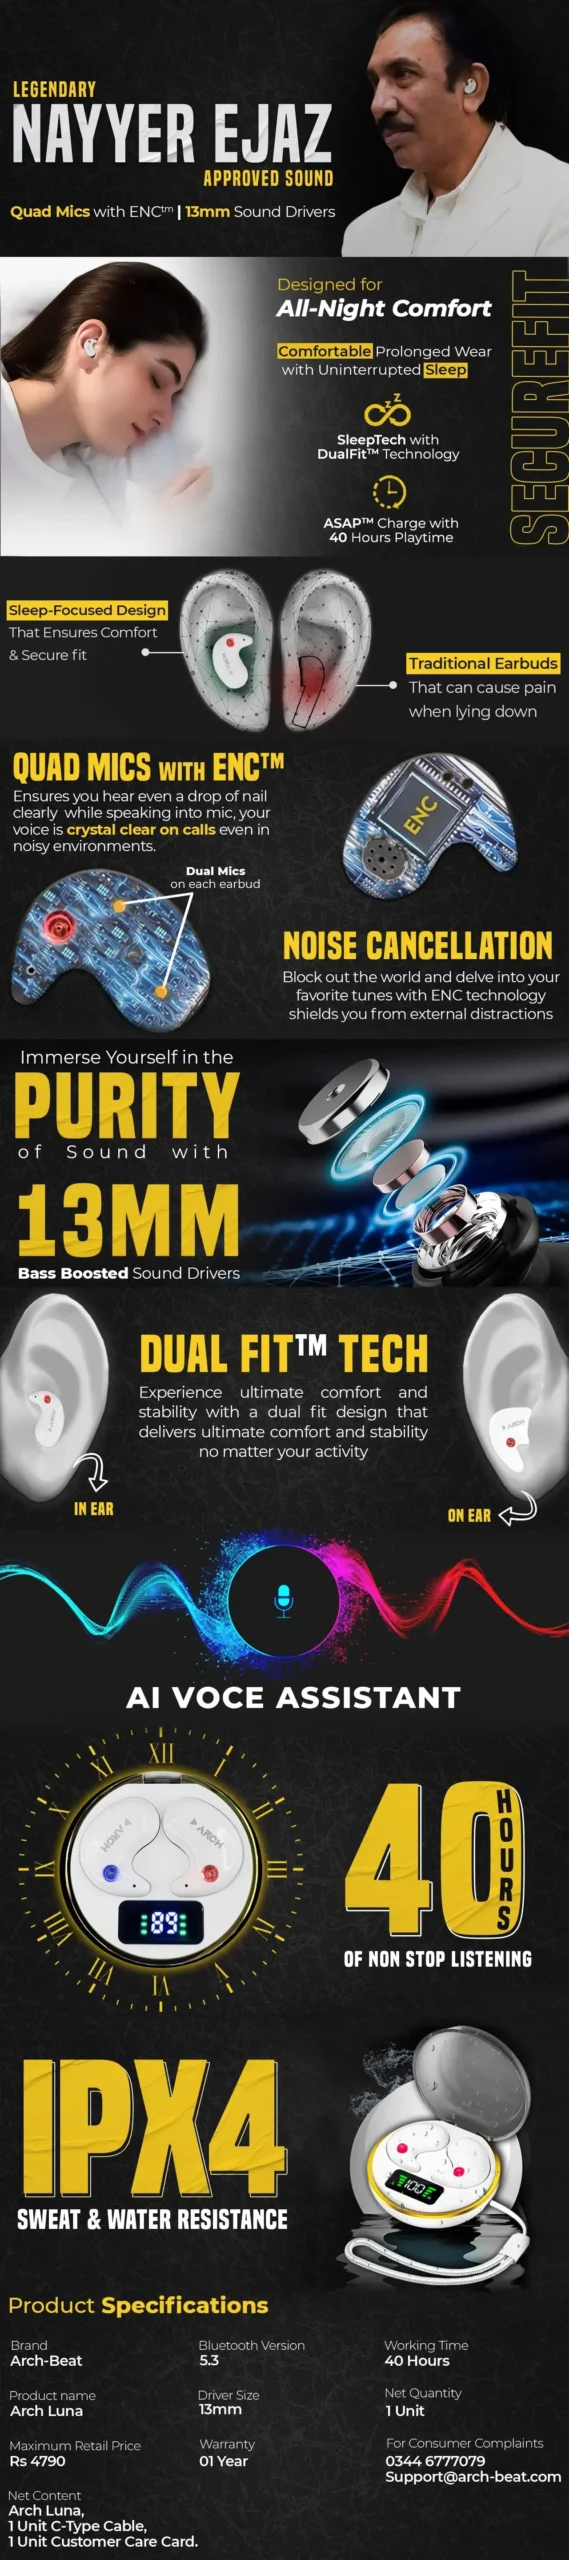 Buy Arch Luna Wireless earphones at best price in Pakistan | Rhizmall.pk